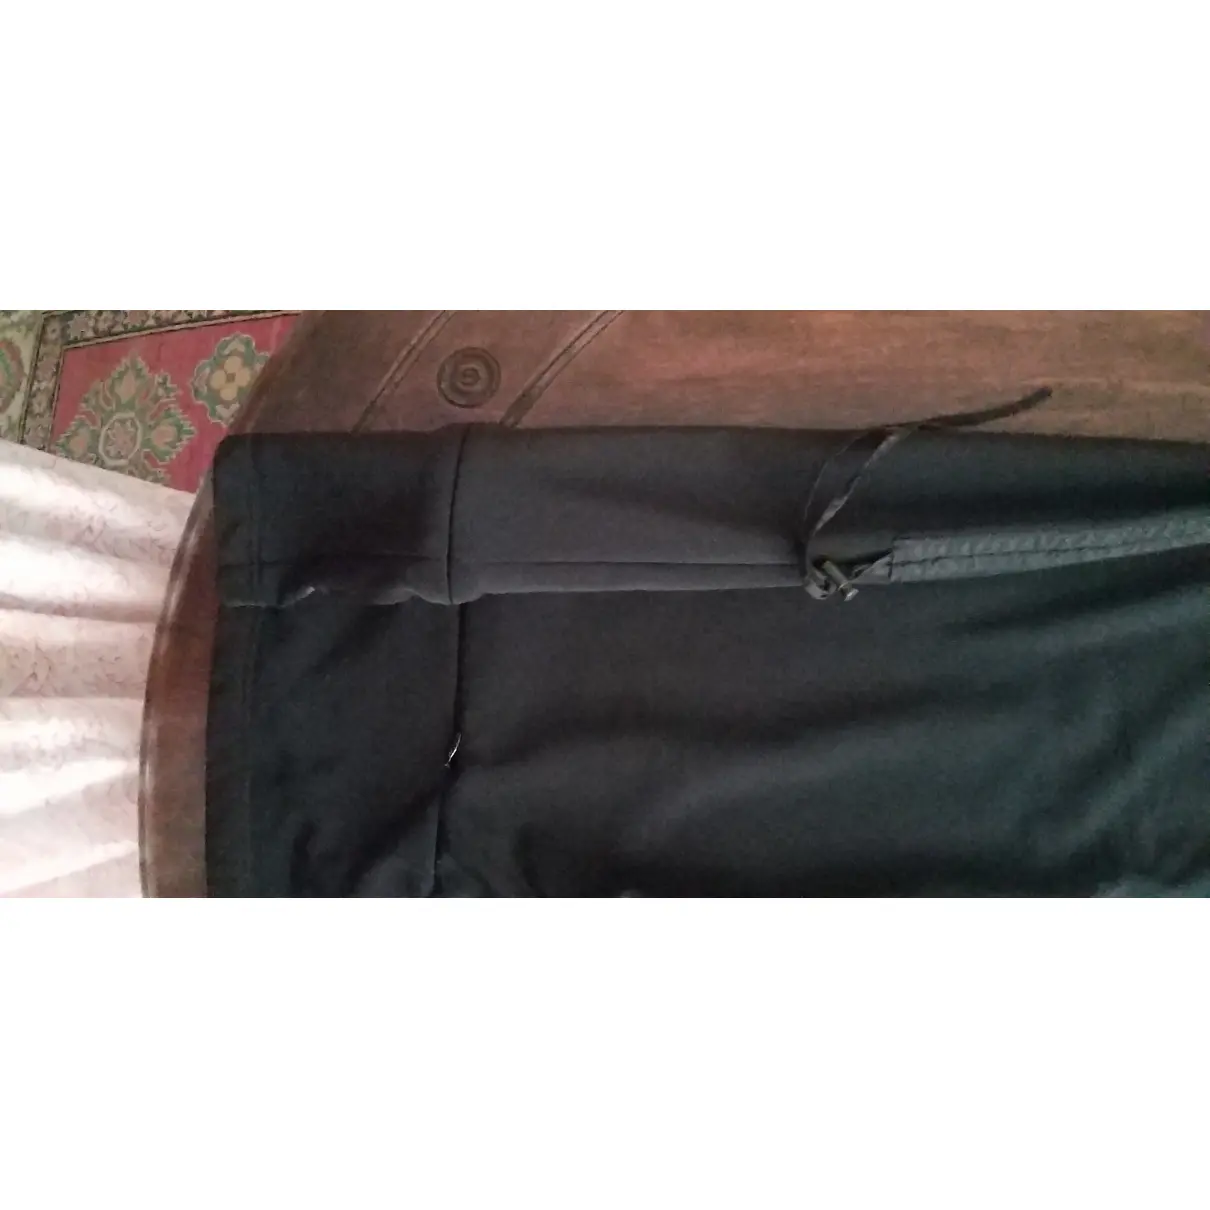 Buy Gerard Darel Mid-length skirt online